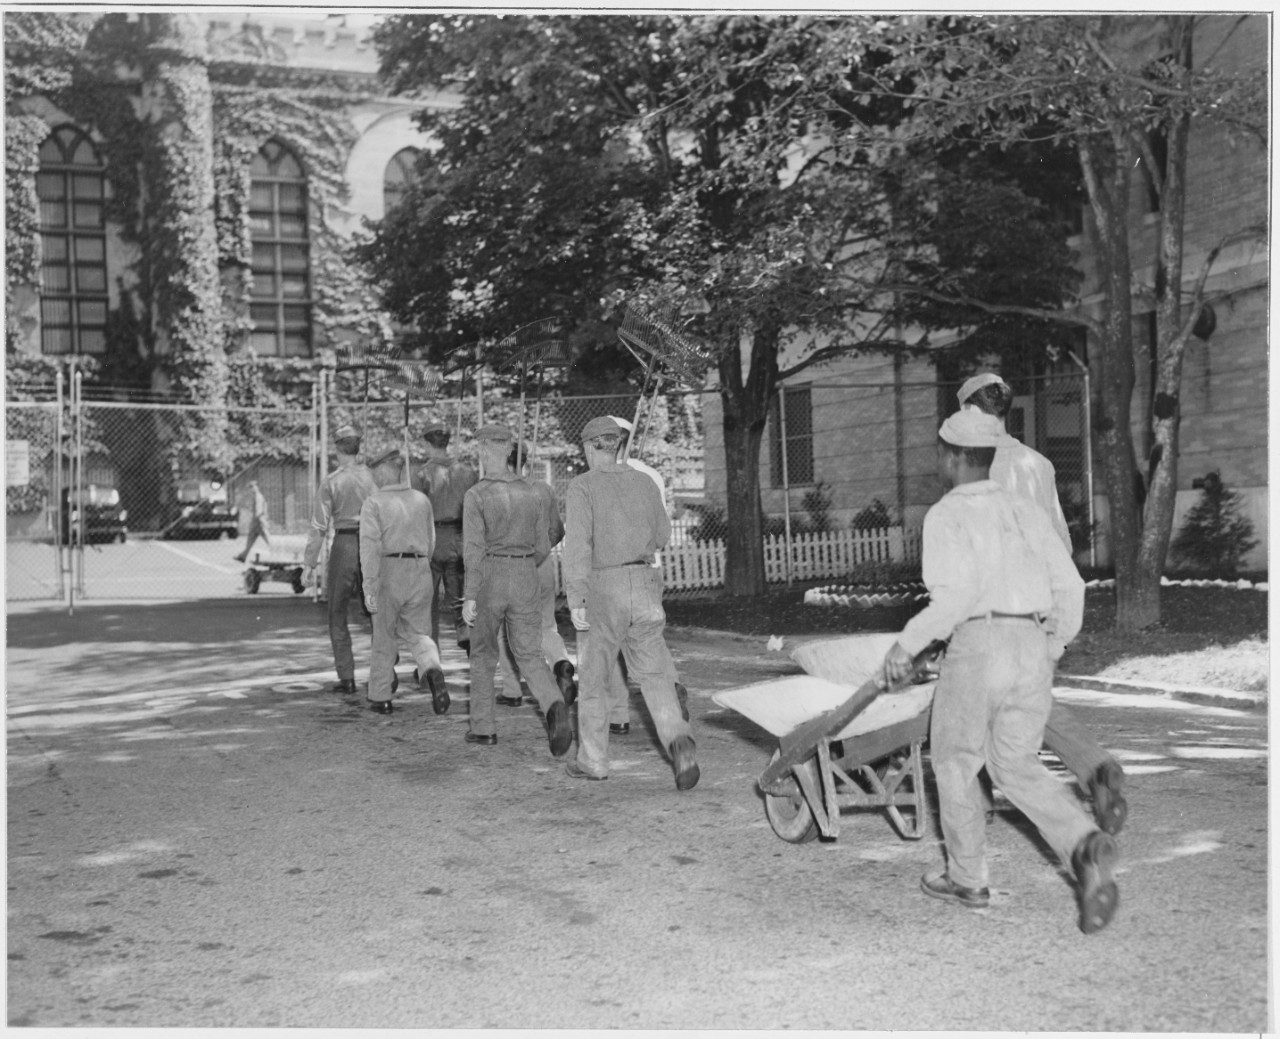 Rehabilitation conducted at U.S. Naval Disciplinary Barracks, July 1948